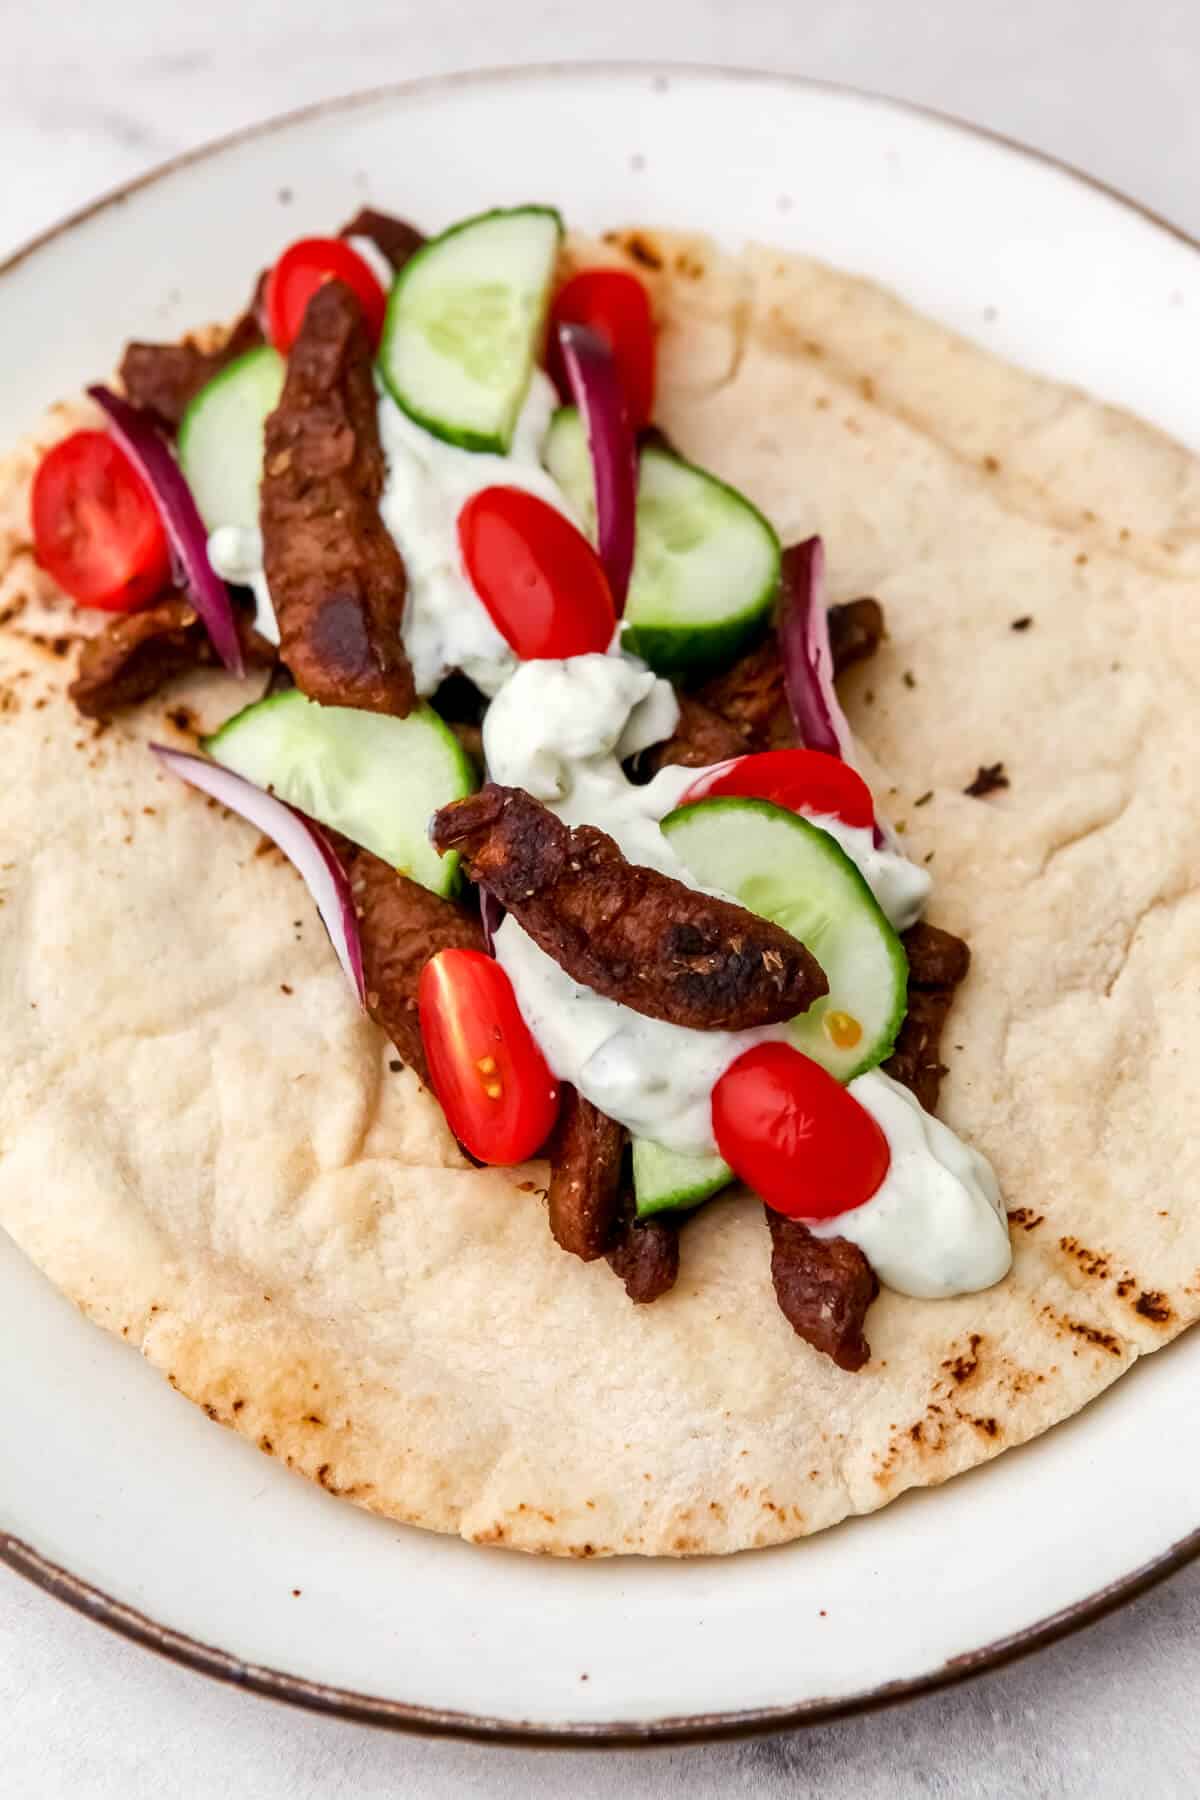 Vegan seitan, cucumber slices, cherry tomatoes, and vegan tzatziki on a pita before rolling into a wrap.